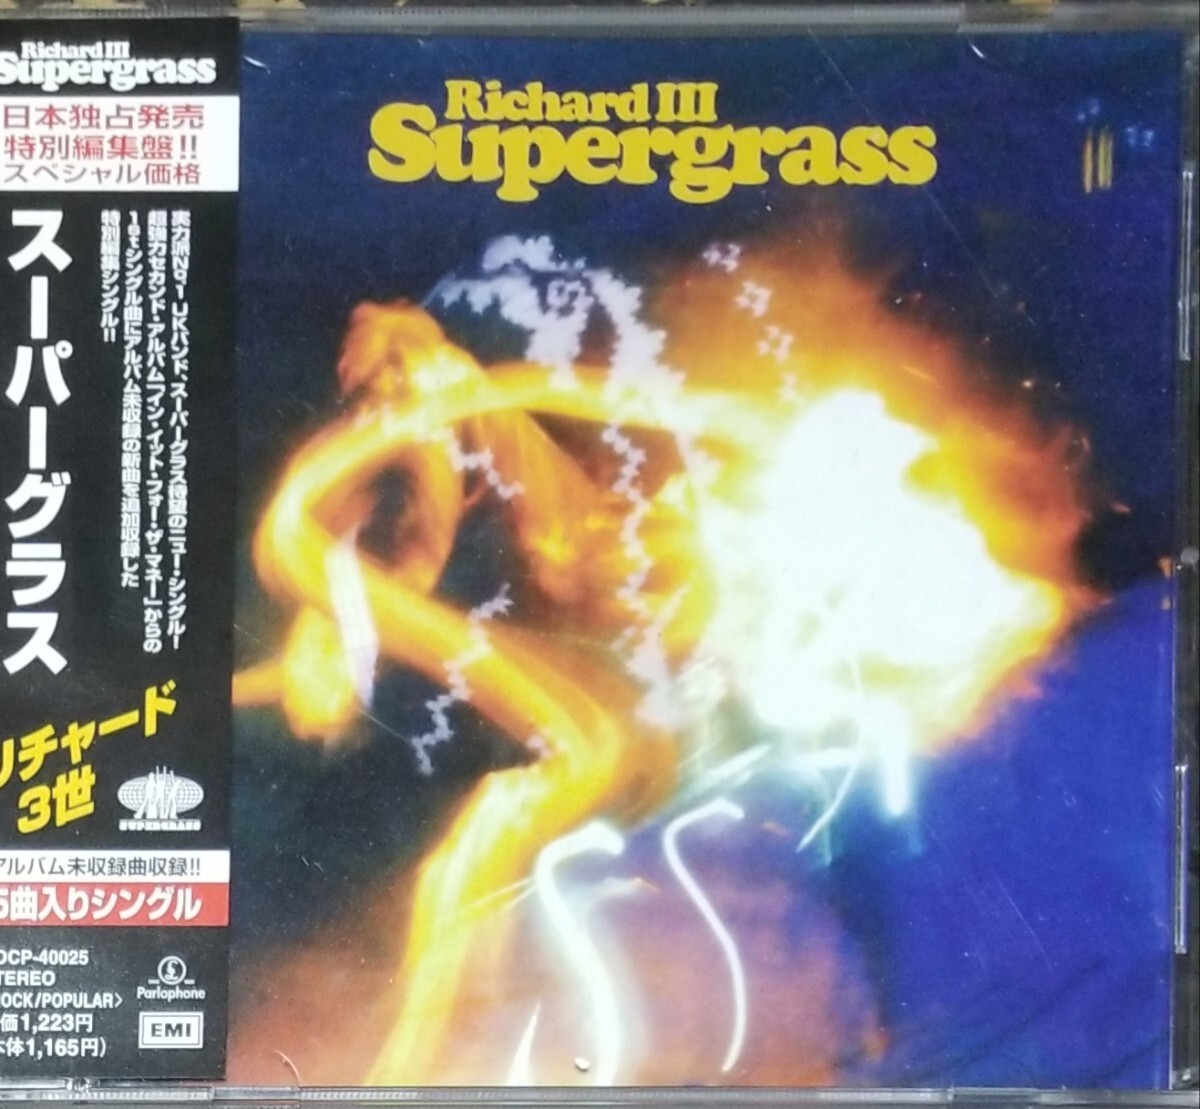 X5貴重帯付き日本盤■スーパーグラス(supergrass)「リチャード3世」CD